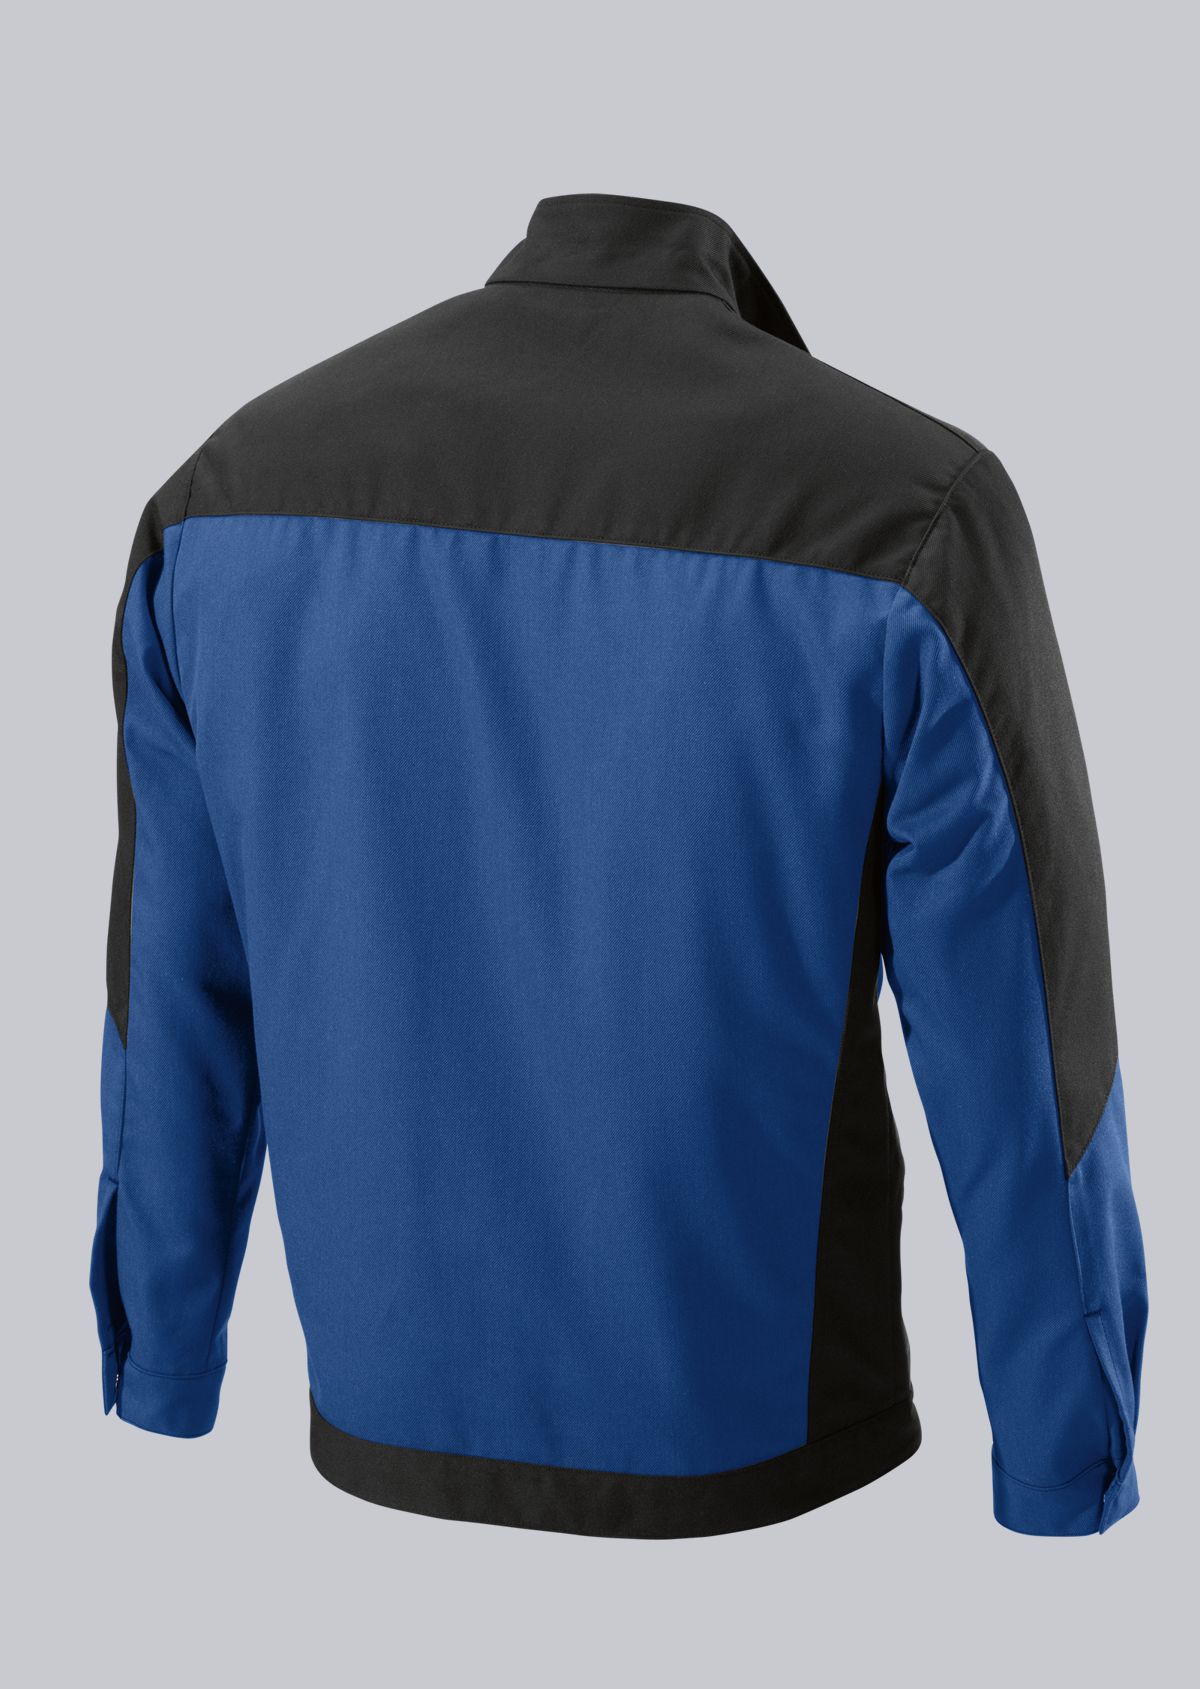 BP® Multi-standard APC1 jacket